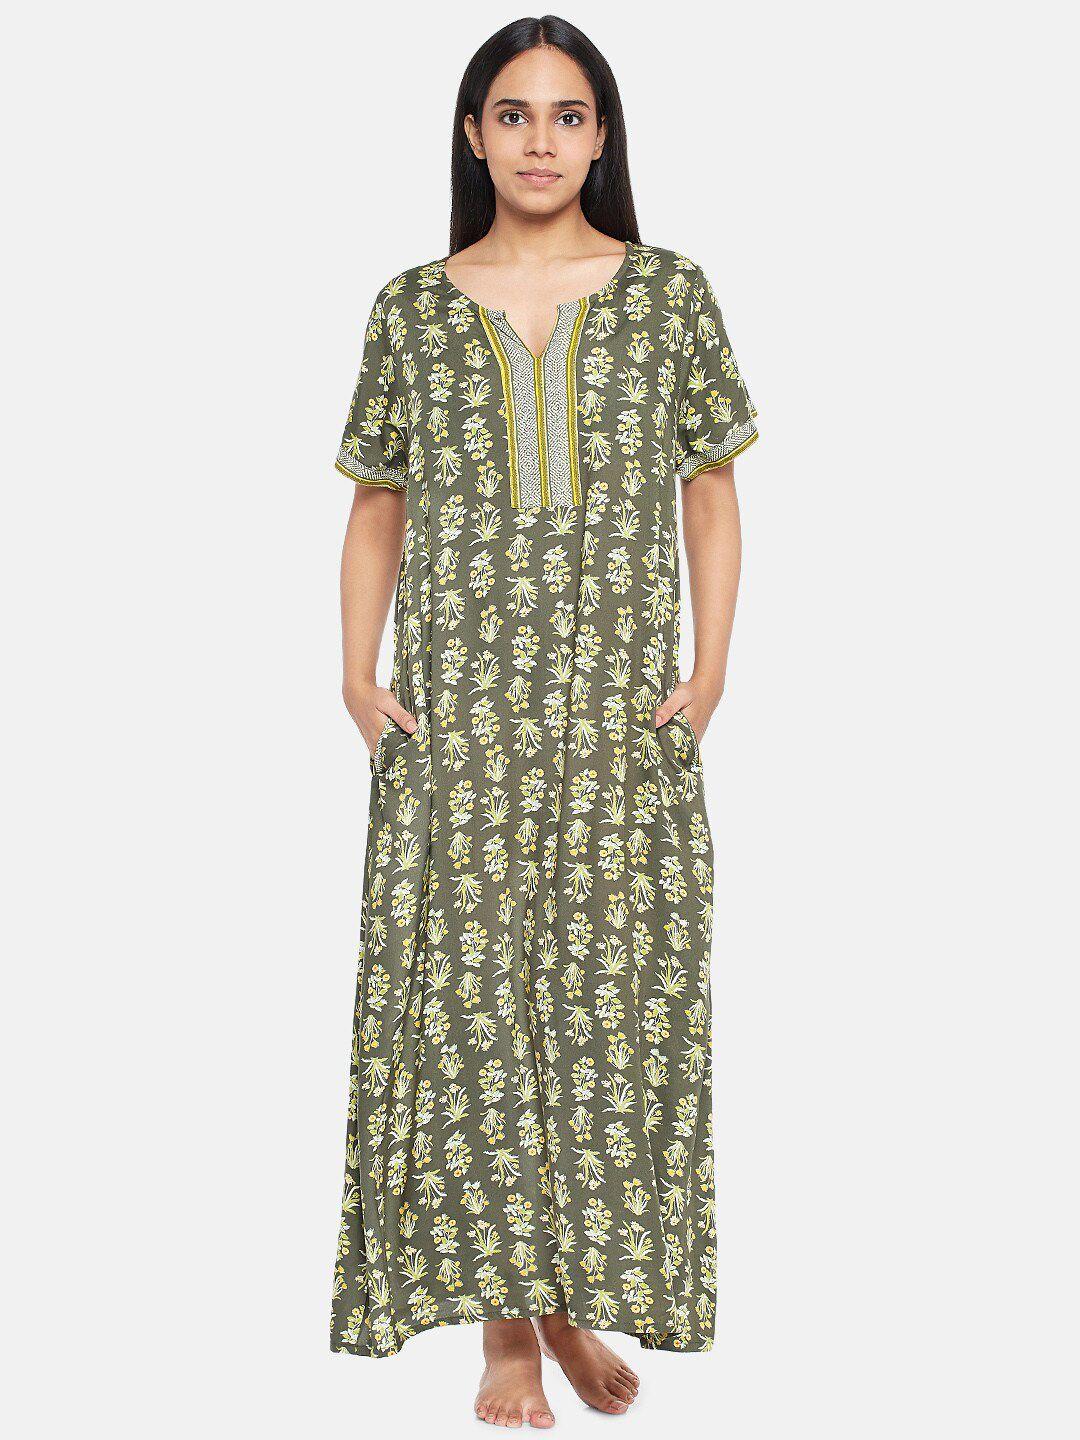 rangmanch by pantaloons olive green printed maxi nightdress